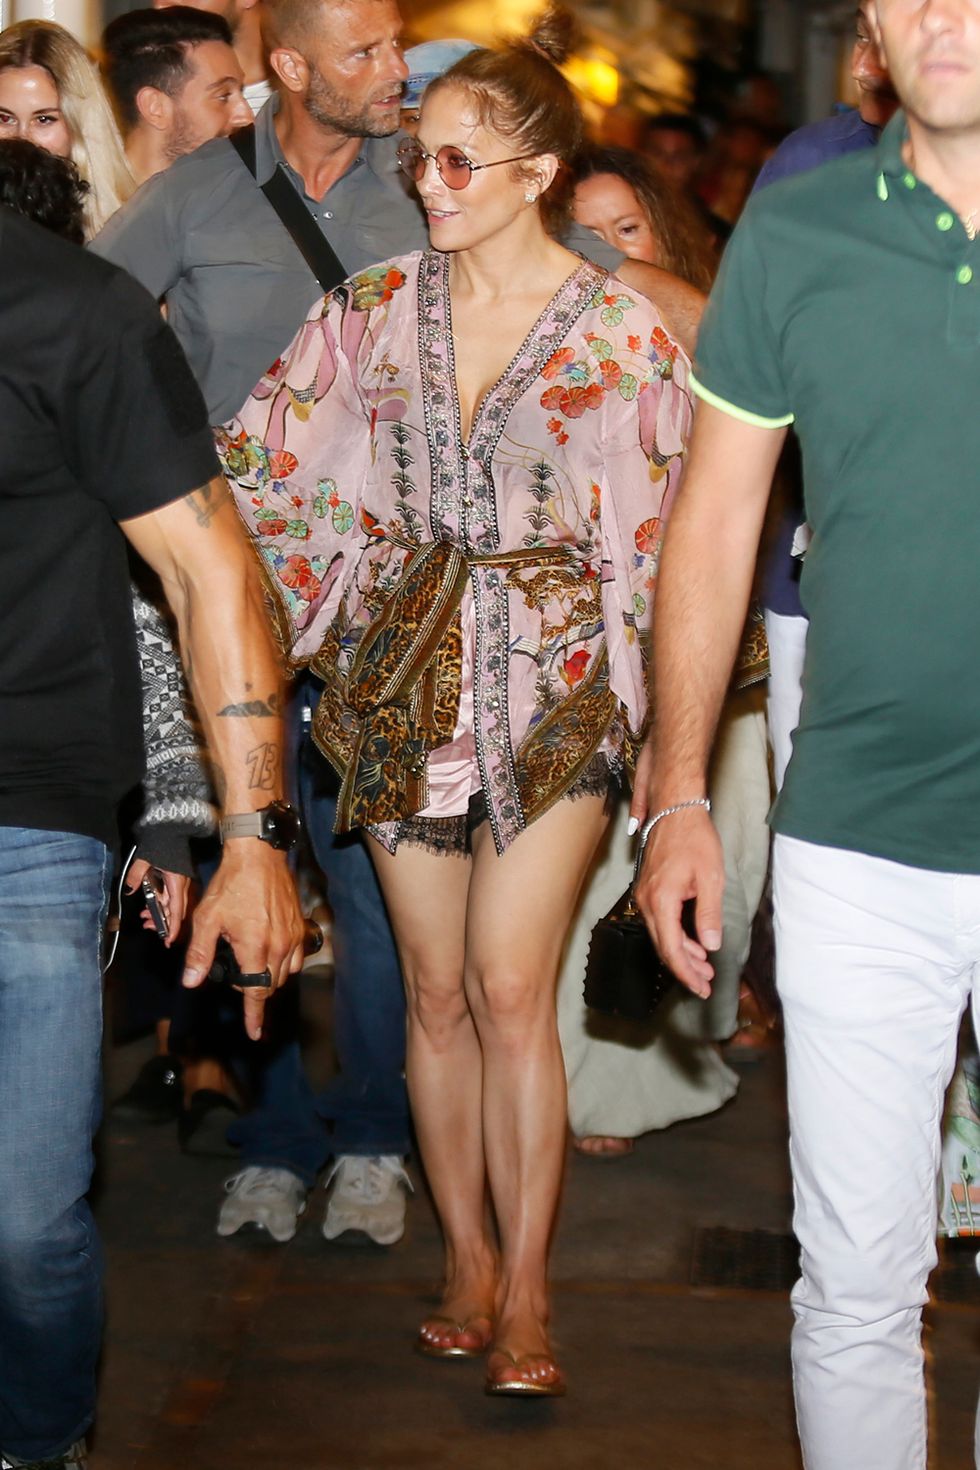 Jennifer Garner channels Jennifer Lopez's latest look in floral skirt